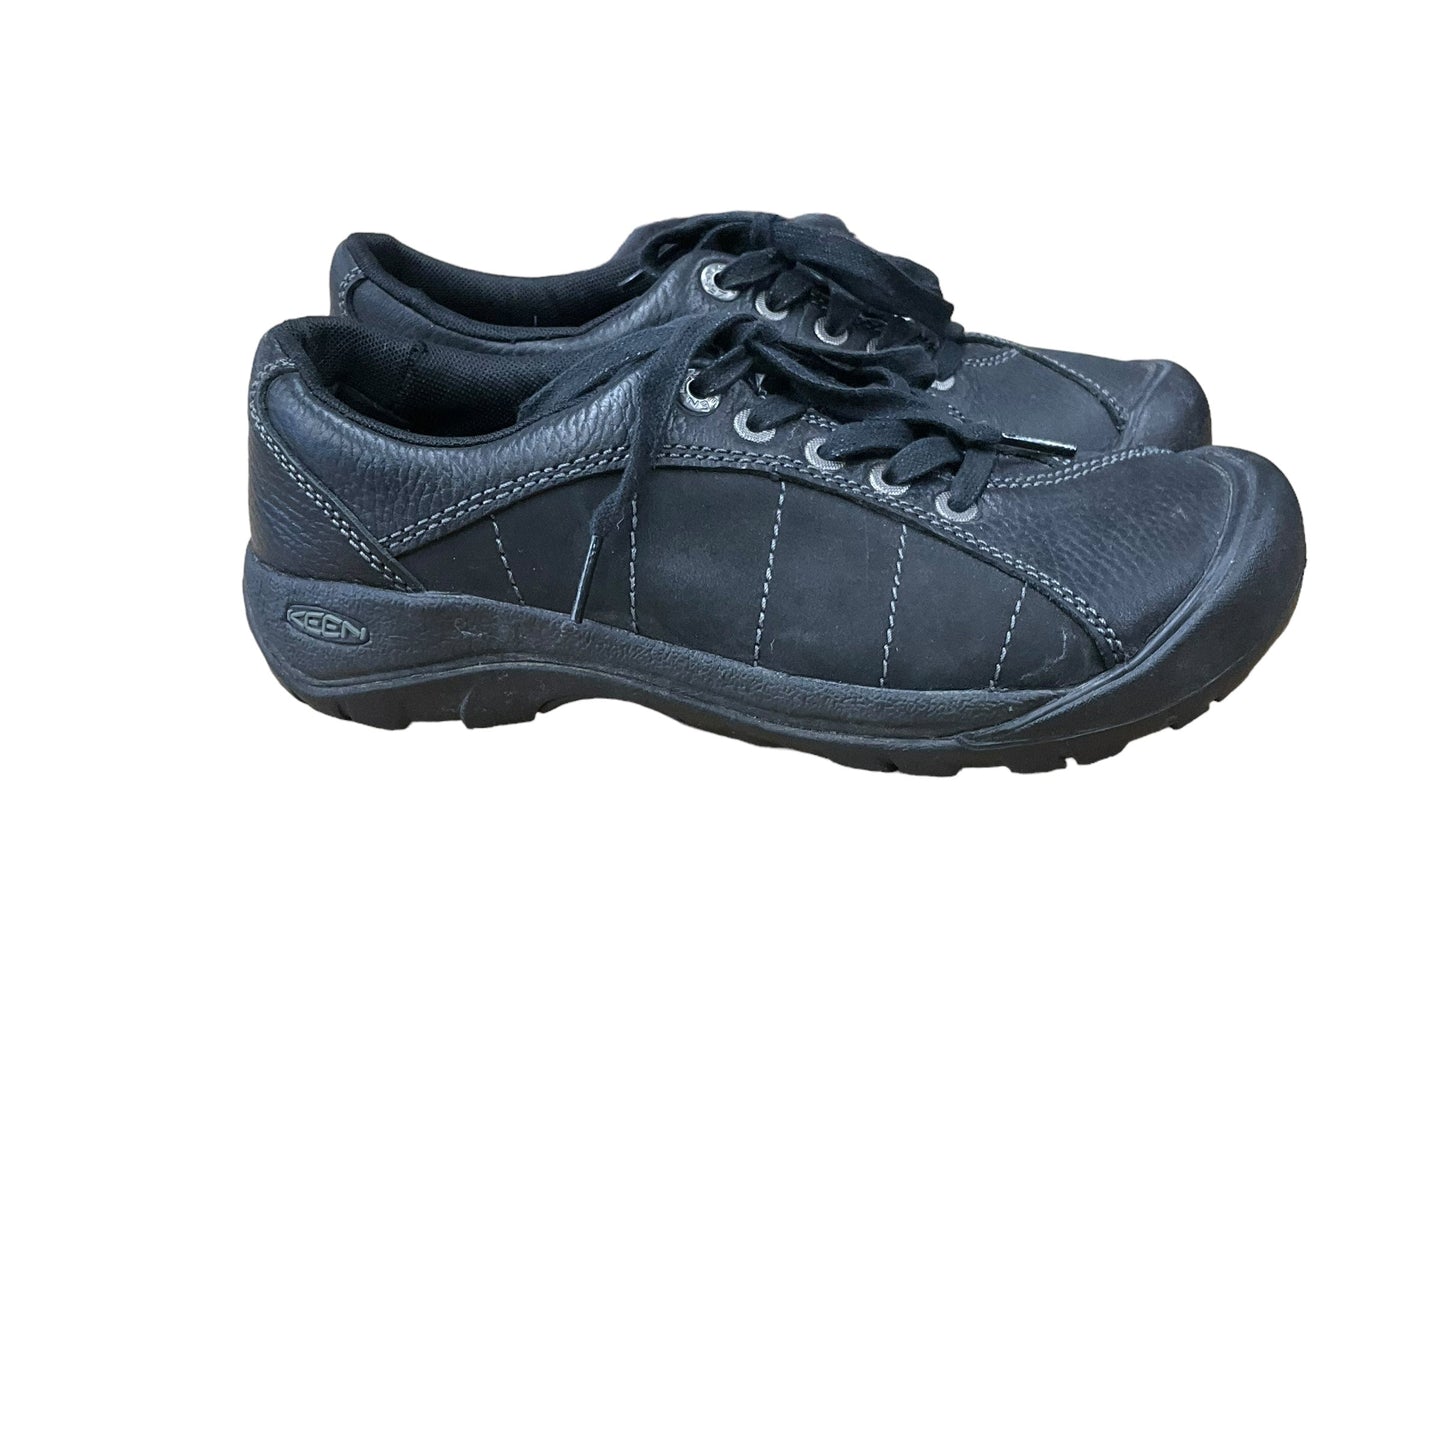 Black Shoes Flats Keen, Size 7